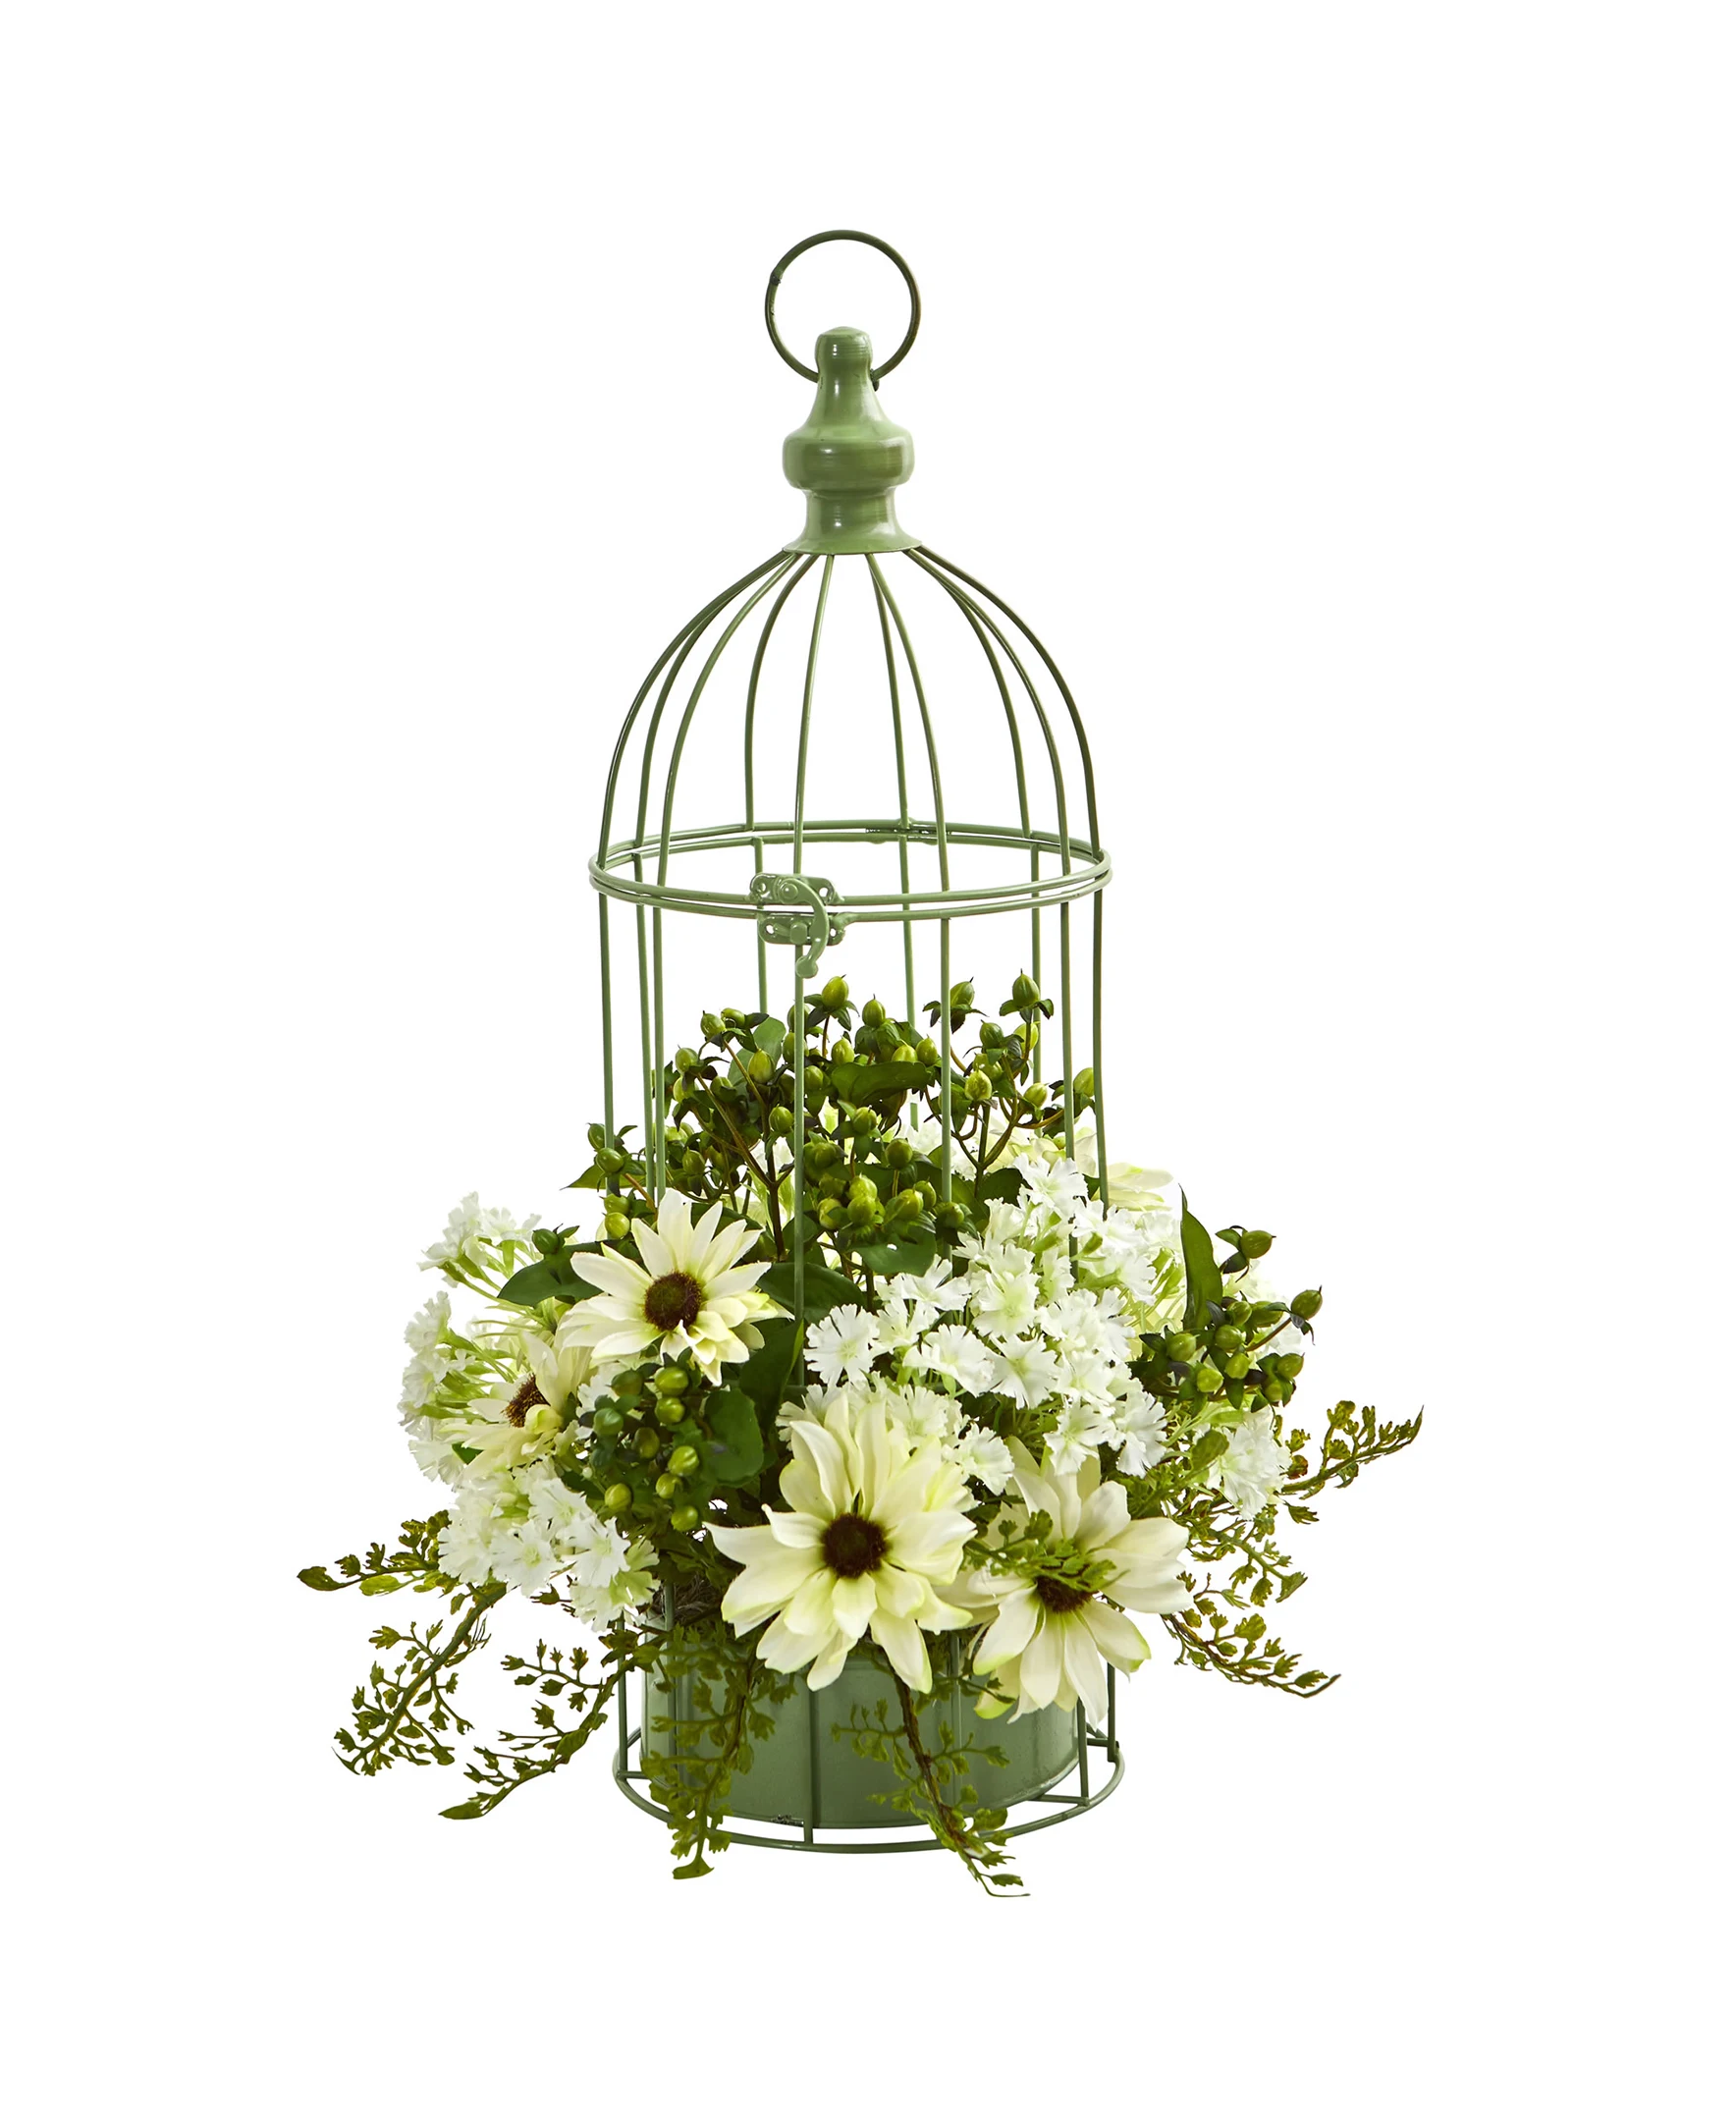 

Cream Daisy Artificial Flower Arrangement in Decorative Bird Cage